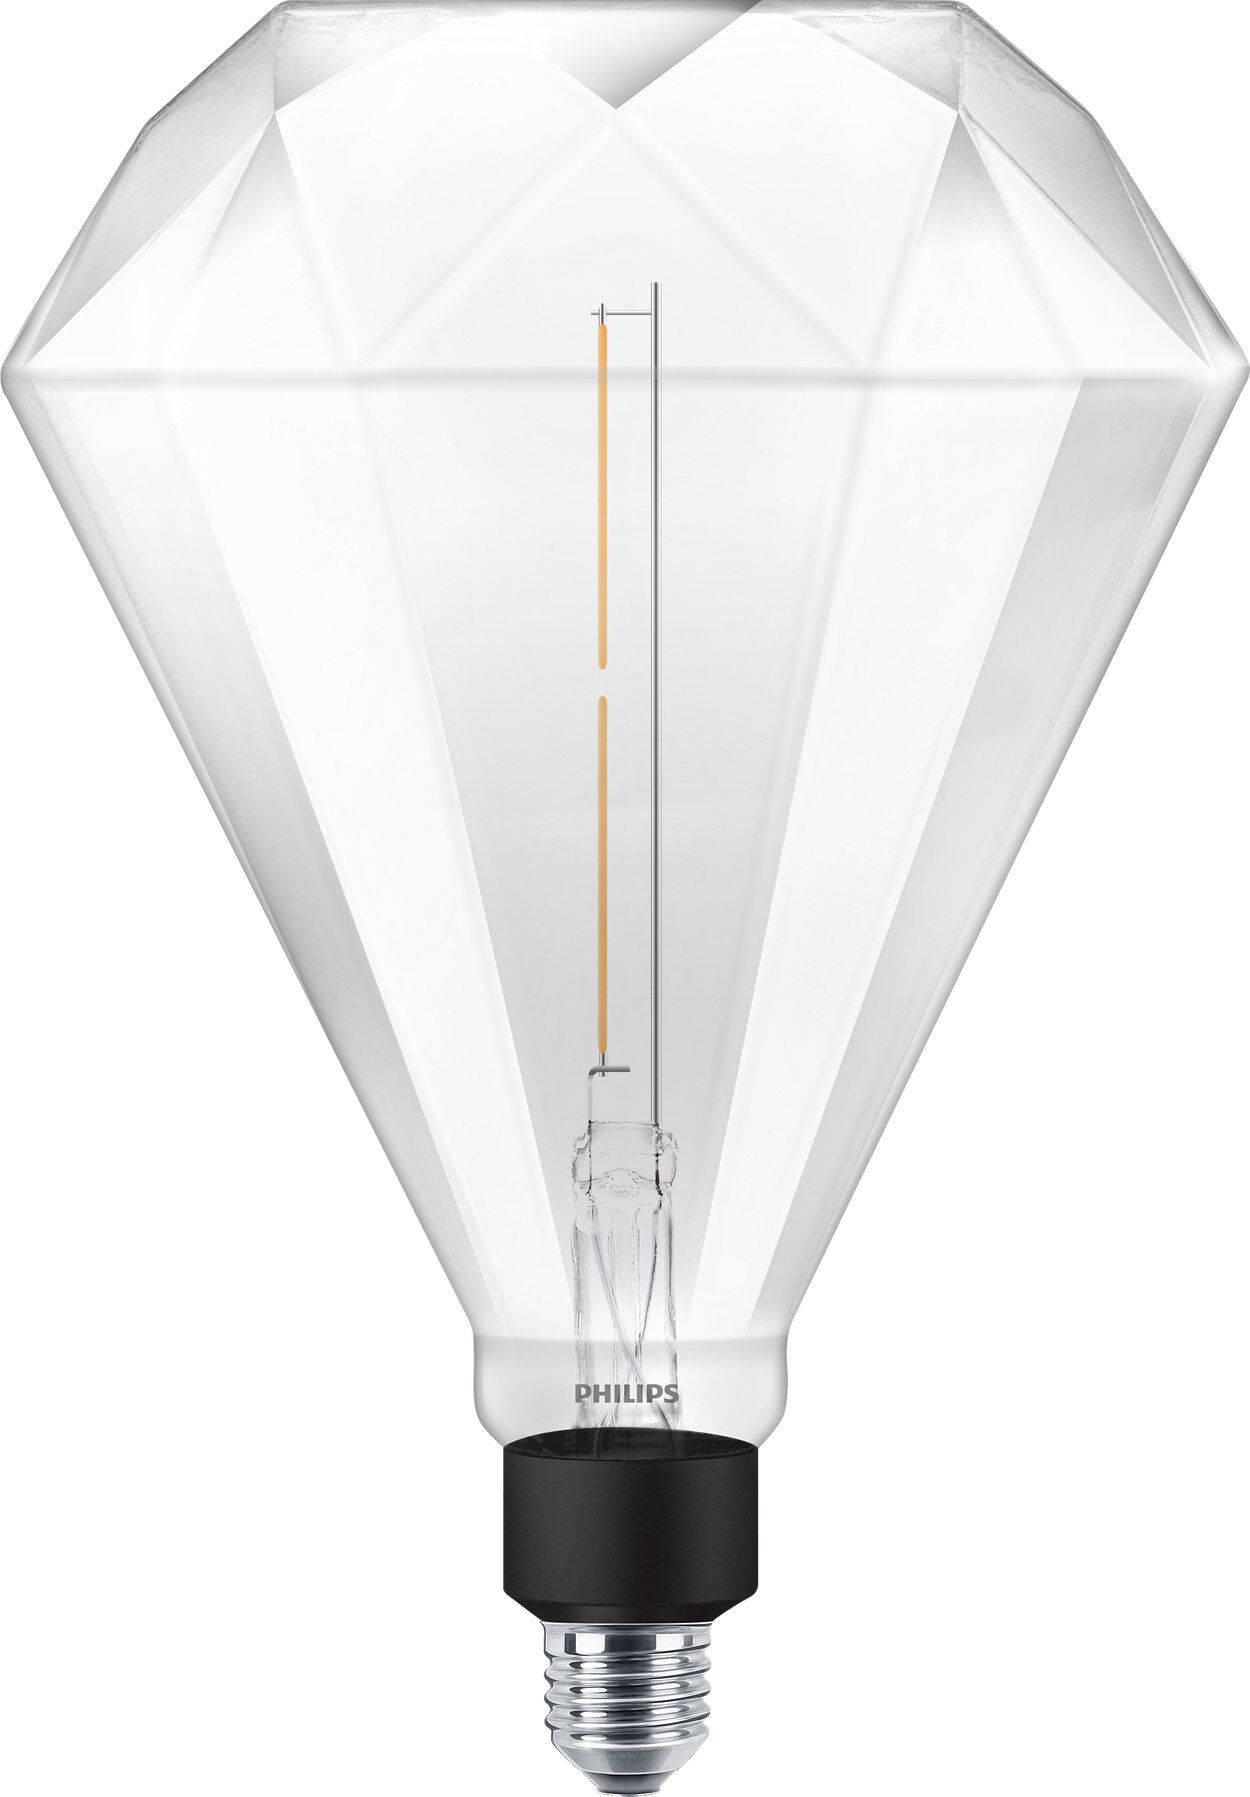 Philips Deco-LED Lampe Giant Diamond dimmbar warmweiß Leuchtmittelmarkt 4-35W/830 LED klar E27 online | 400lm kaufen